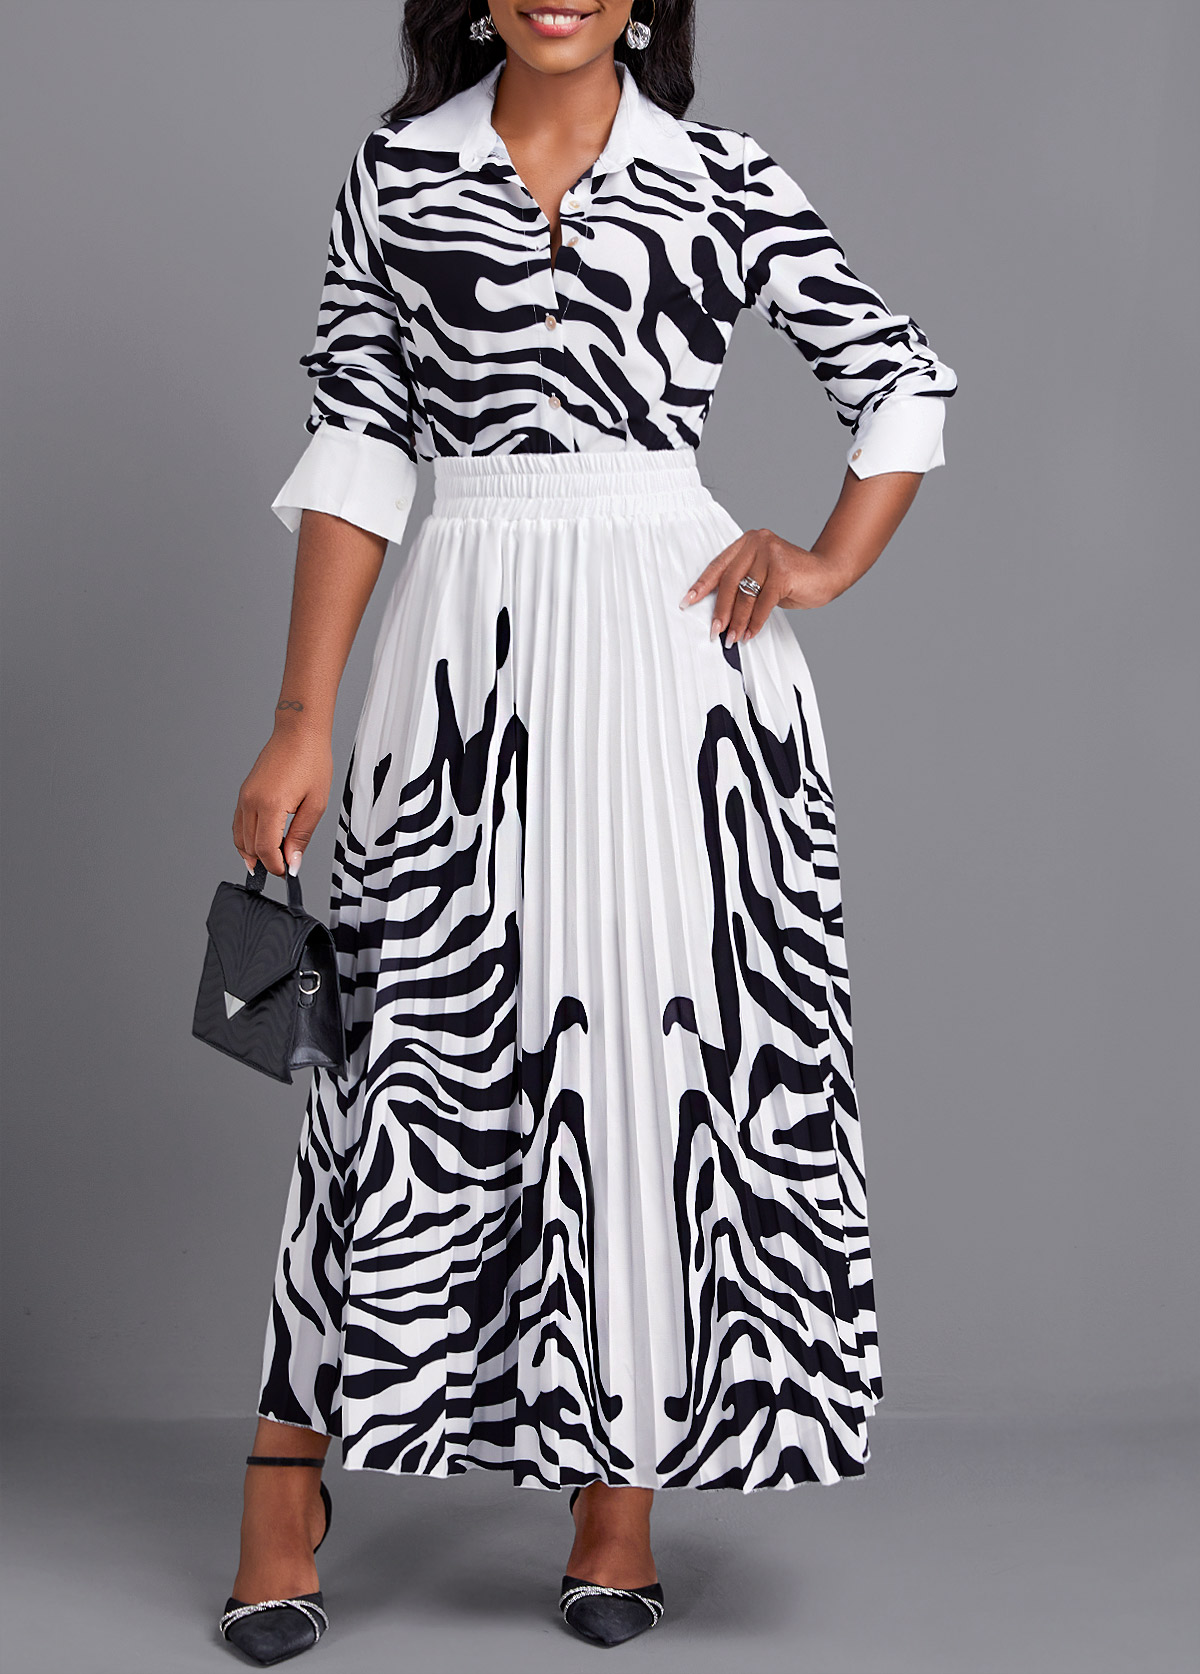 Pleated Zebra Stripe Print White Maxi Top and Skirt